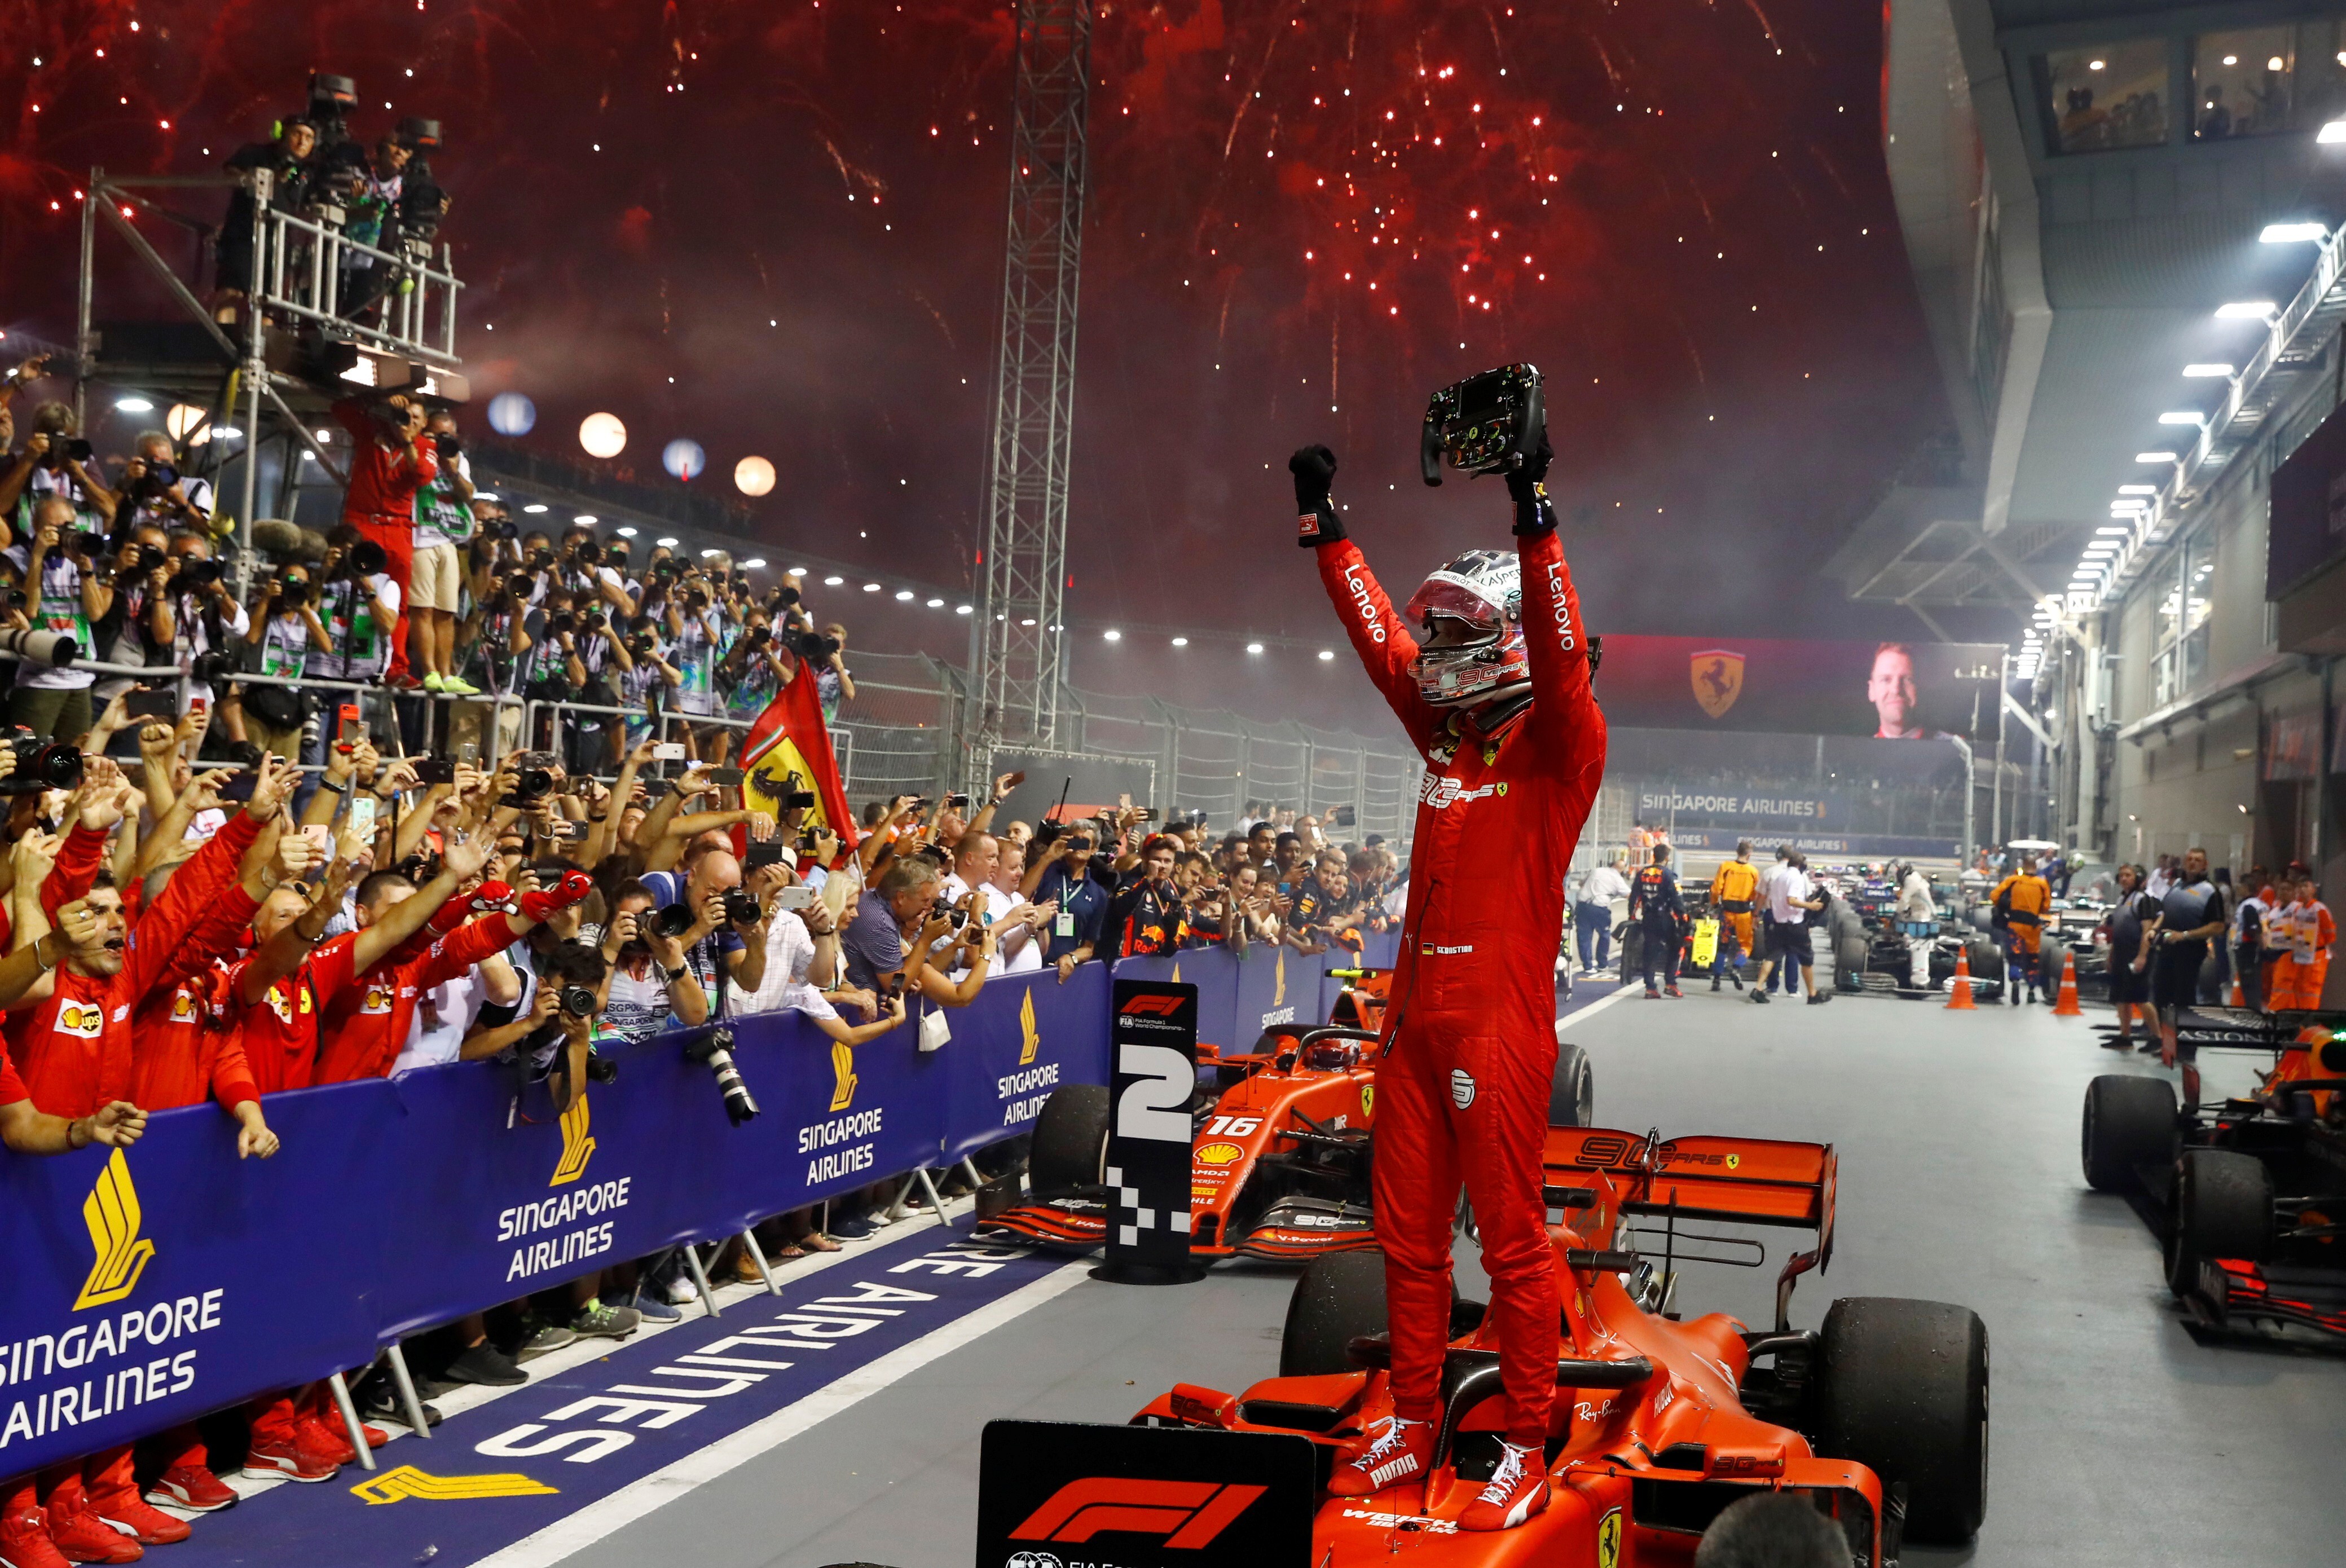 Ferrari’s Sebastian Vettel celebrates after winning the Singapore Grand Prix in 2019. Photo: Reuters